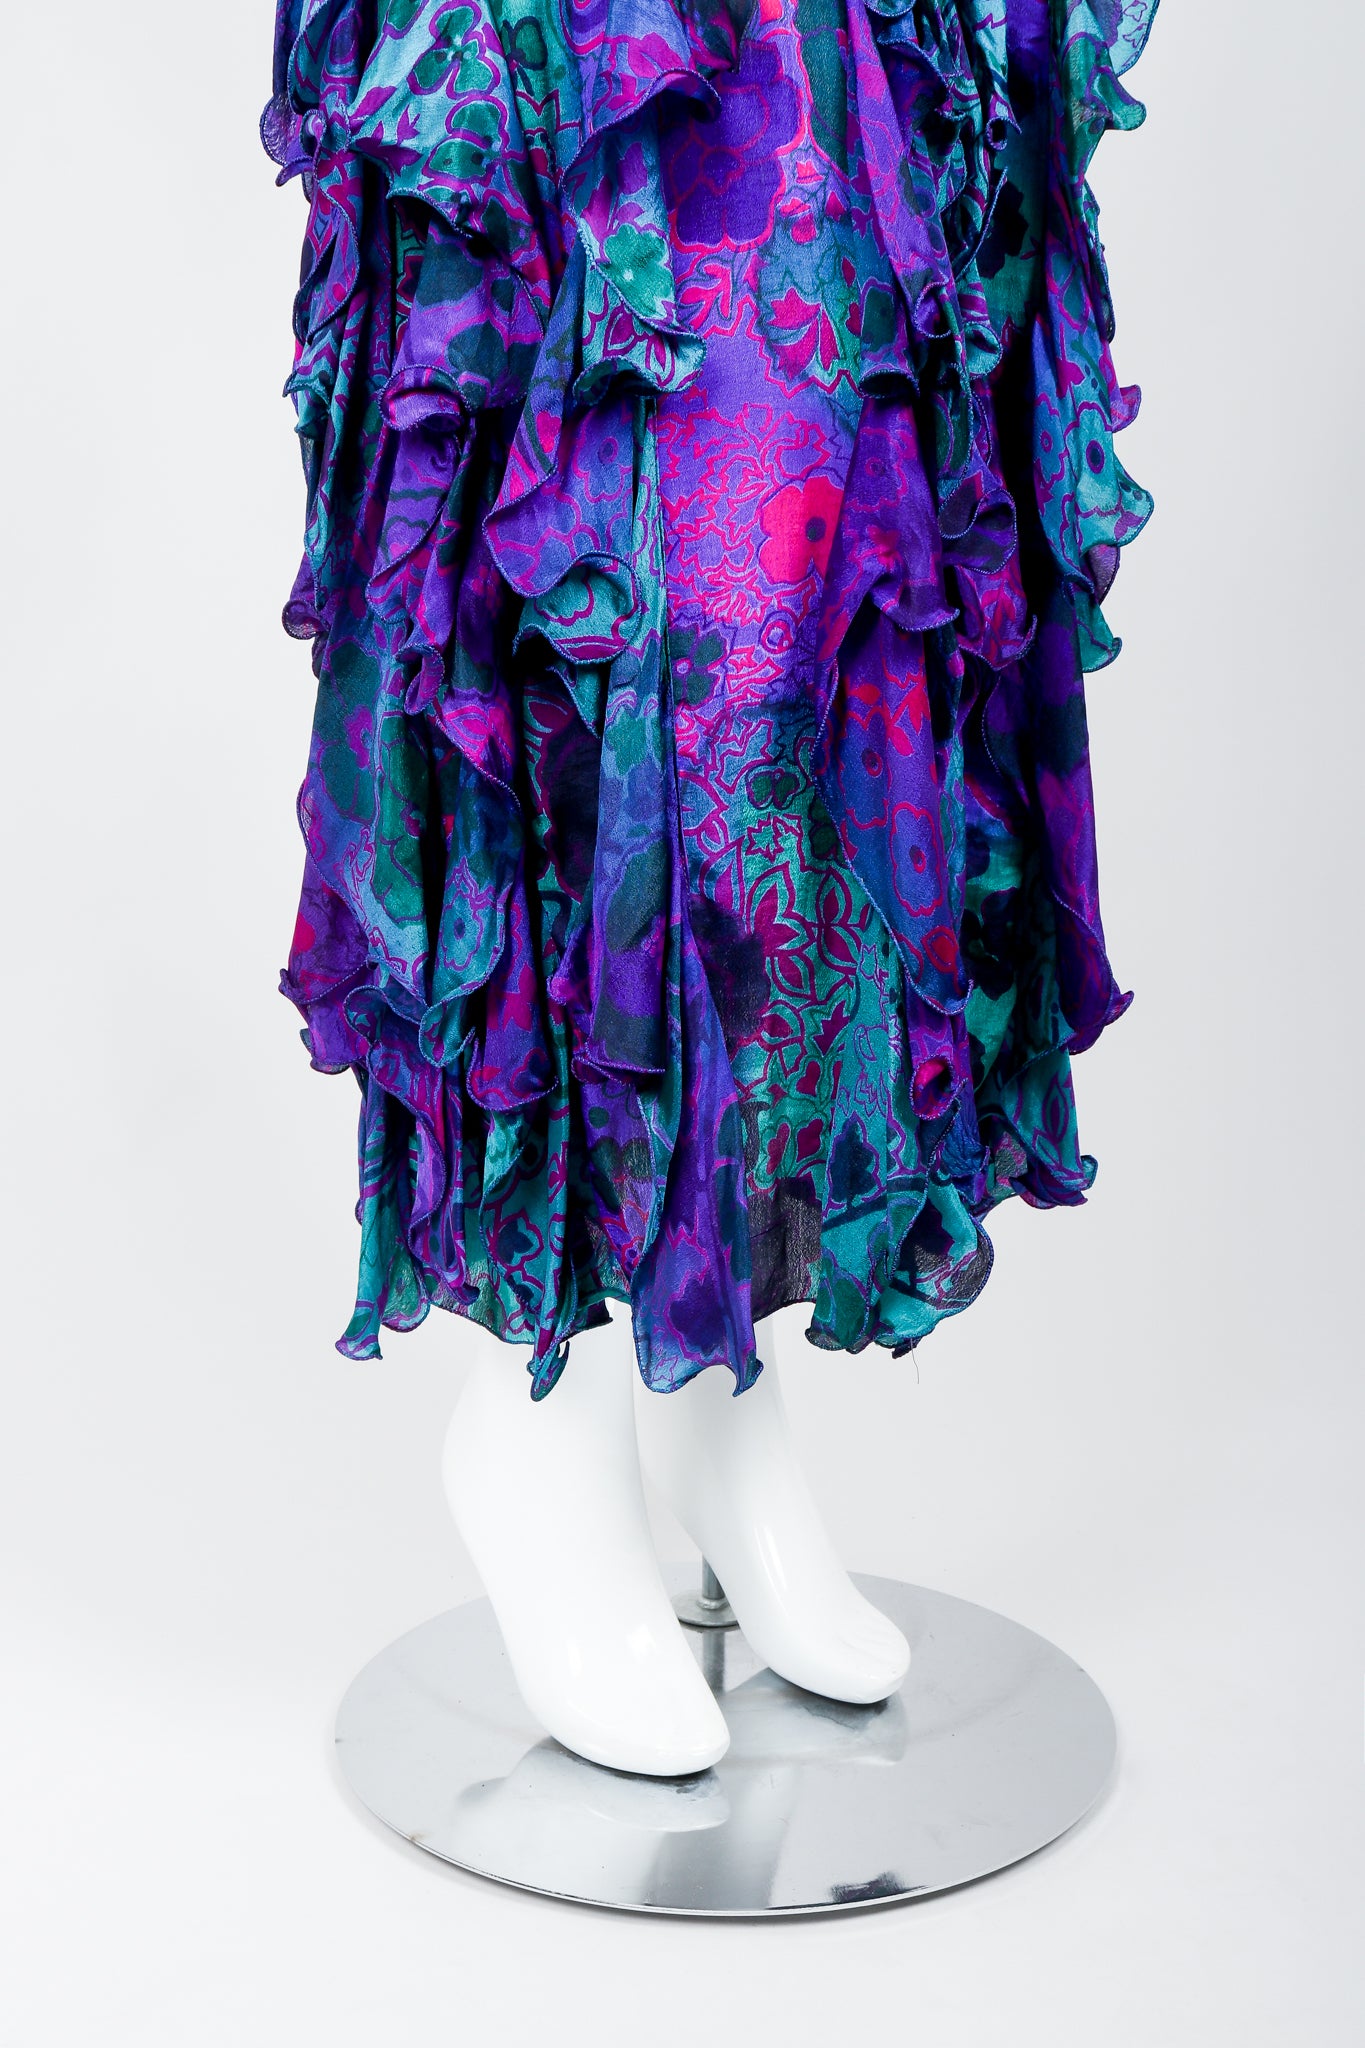 Vintage Judith Ann Creations Silk Ruffle Dress on Mannequin skirt at Recess